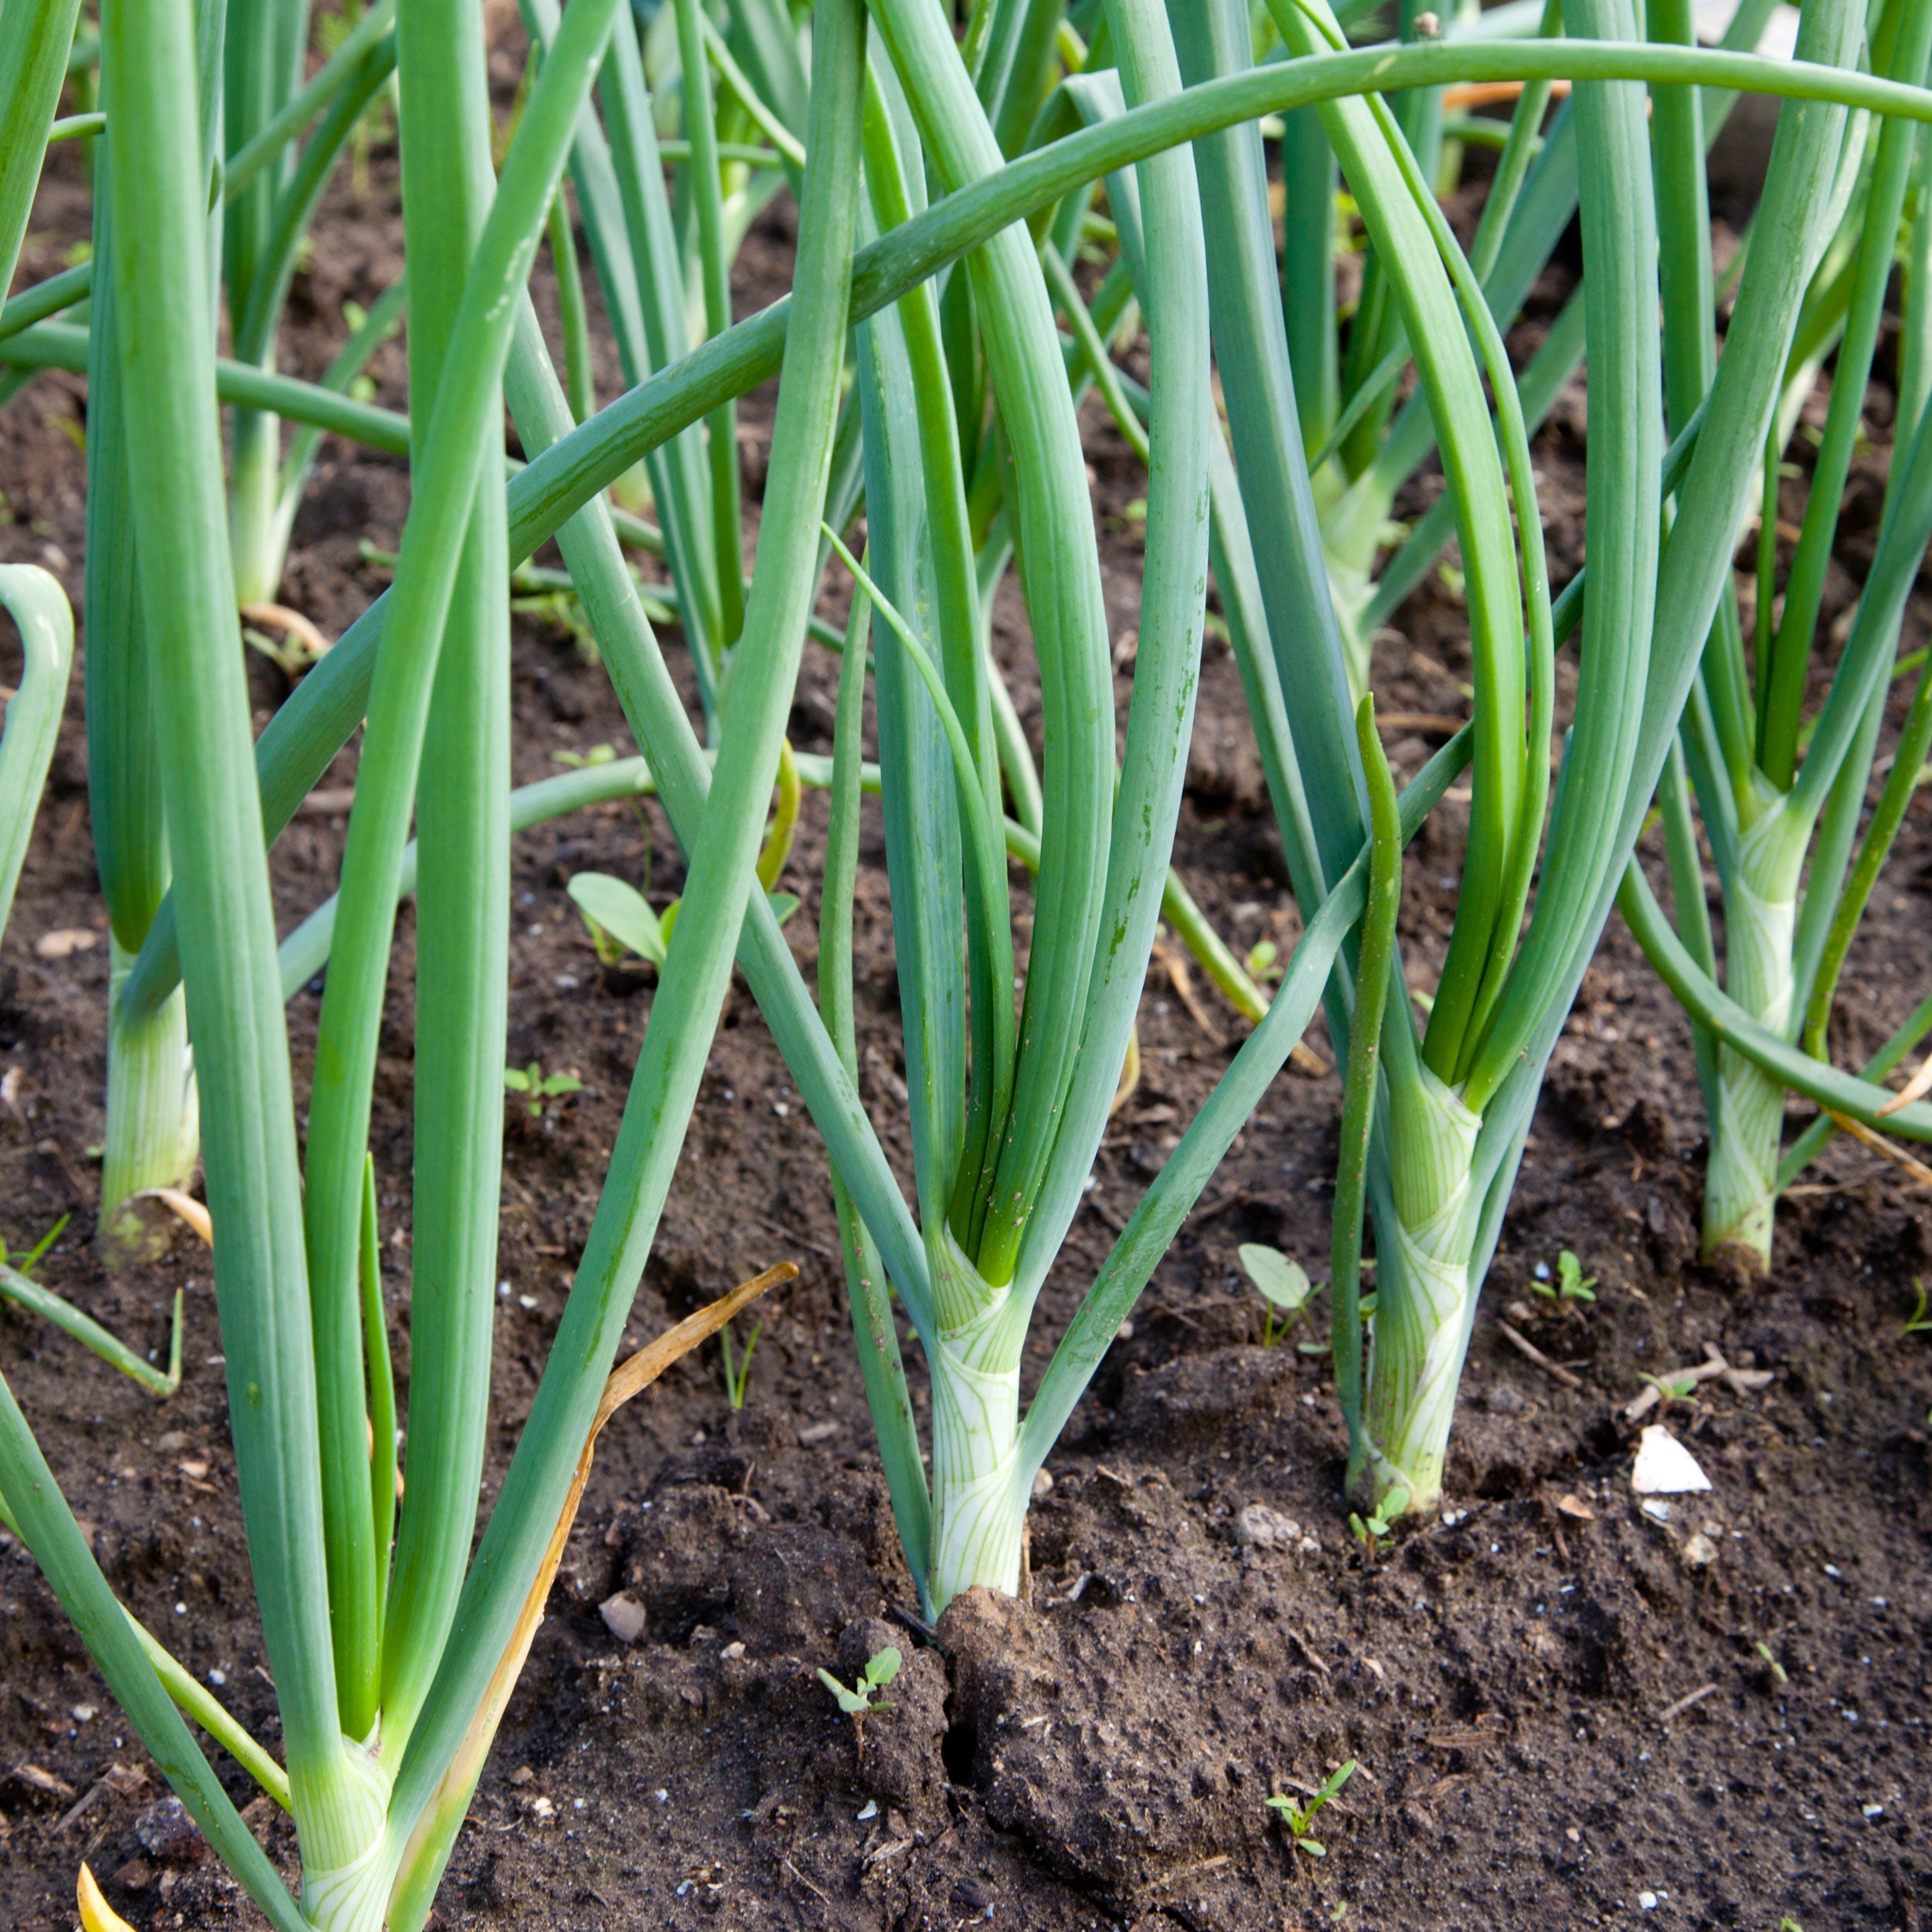 Yellow Onion Sets Naturally Grown Non-GMO| Stuttgarter Onion Bulbs 100-120 Bulbs 1 Pound - FREE SHIPPING